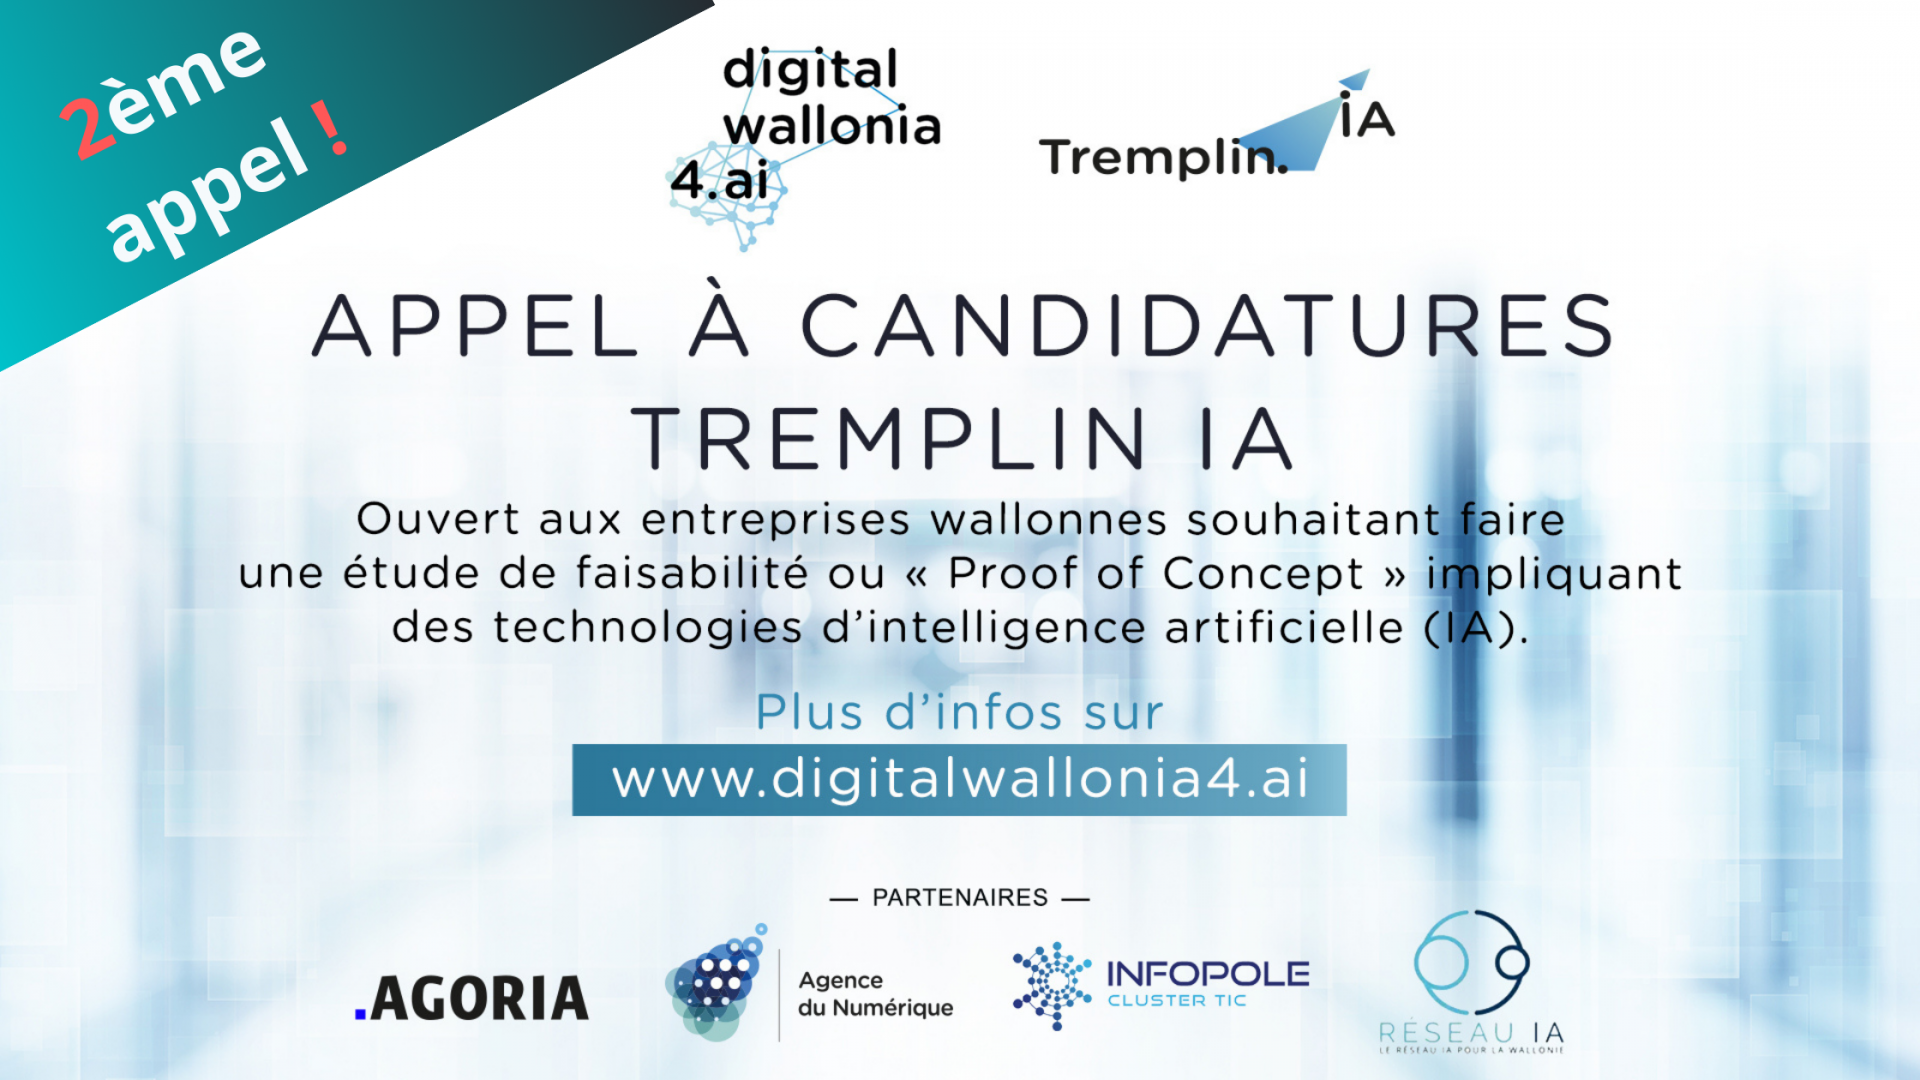 DigitalWallonia4.ai lance un deuxième appel à candidatures 'Tremplin IA'